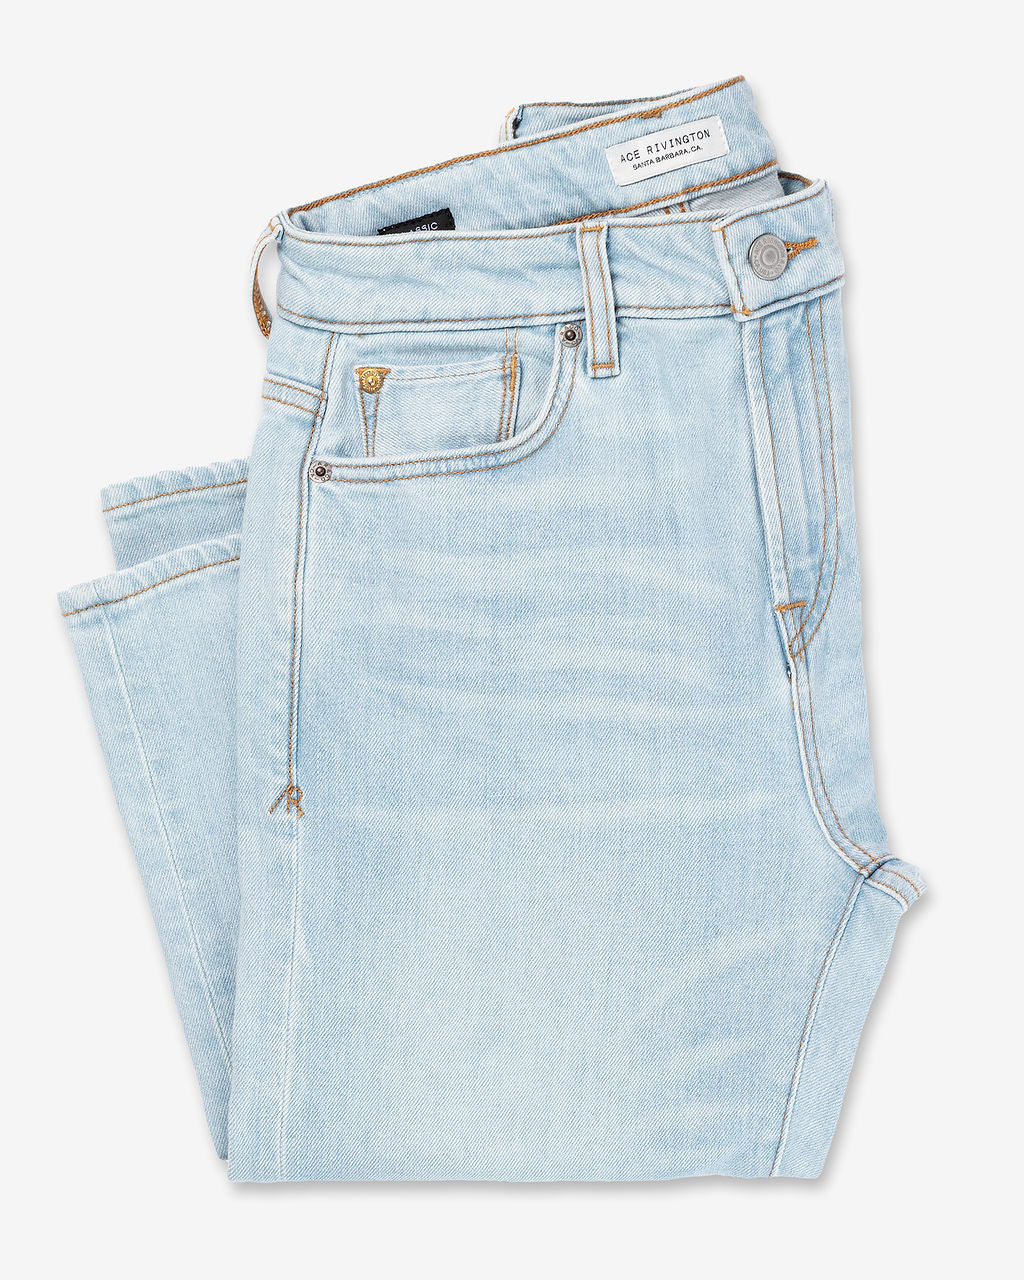 Level 7 Men's Slim Straight Paint Splatter Bleached Blue Ripped Jeans  Premium Denim – Level 7 Jeans